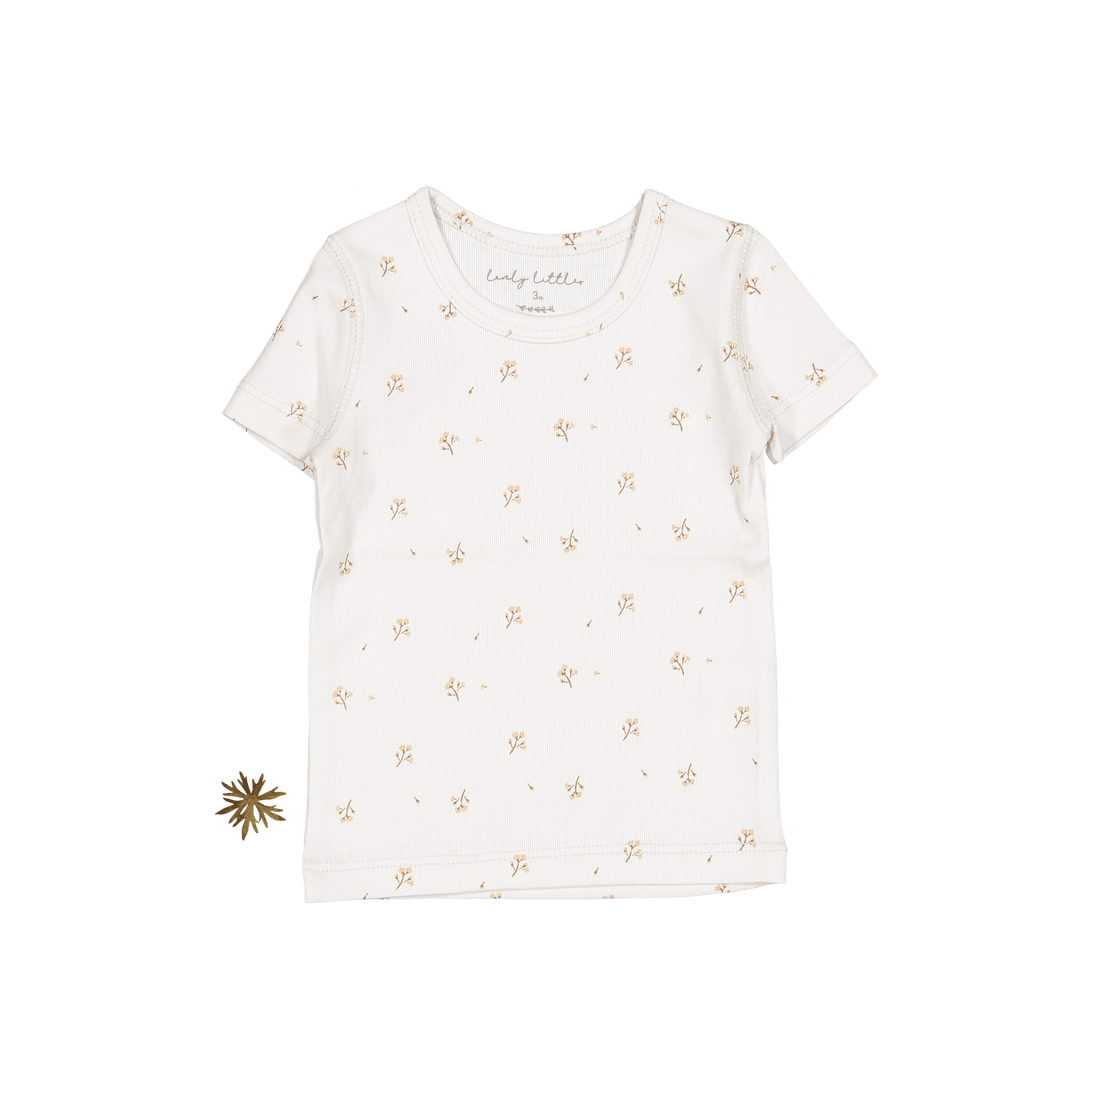 The Printed Short Sleeve Tee - Tan Blossom